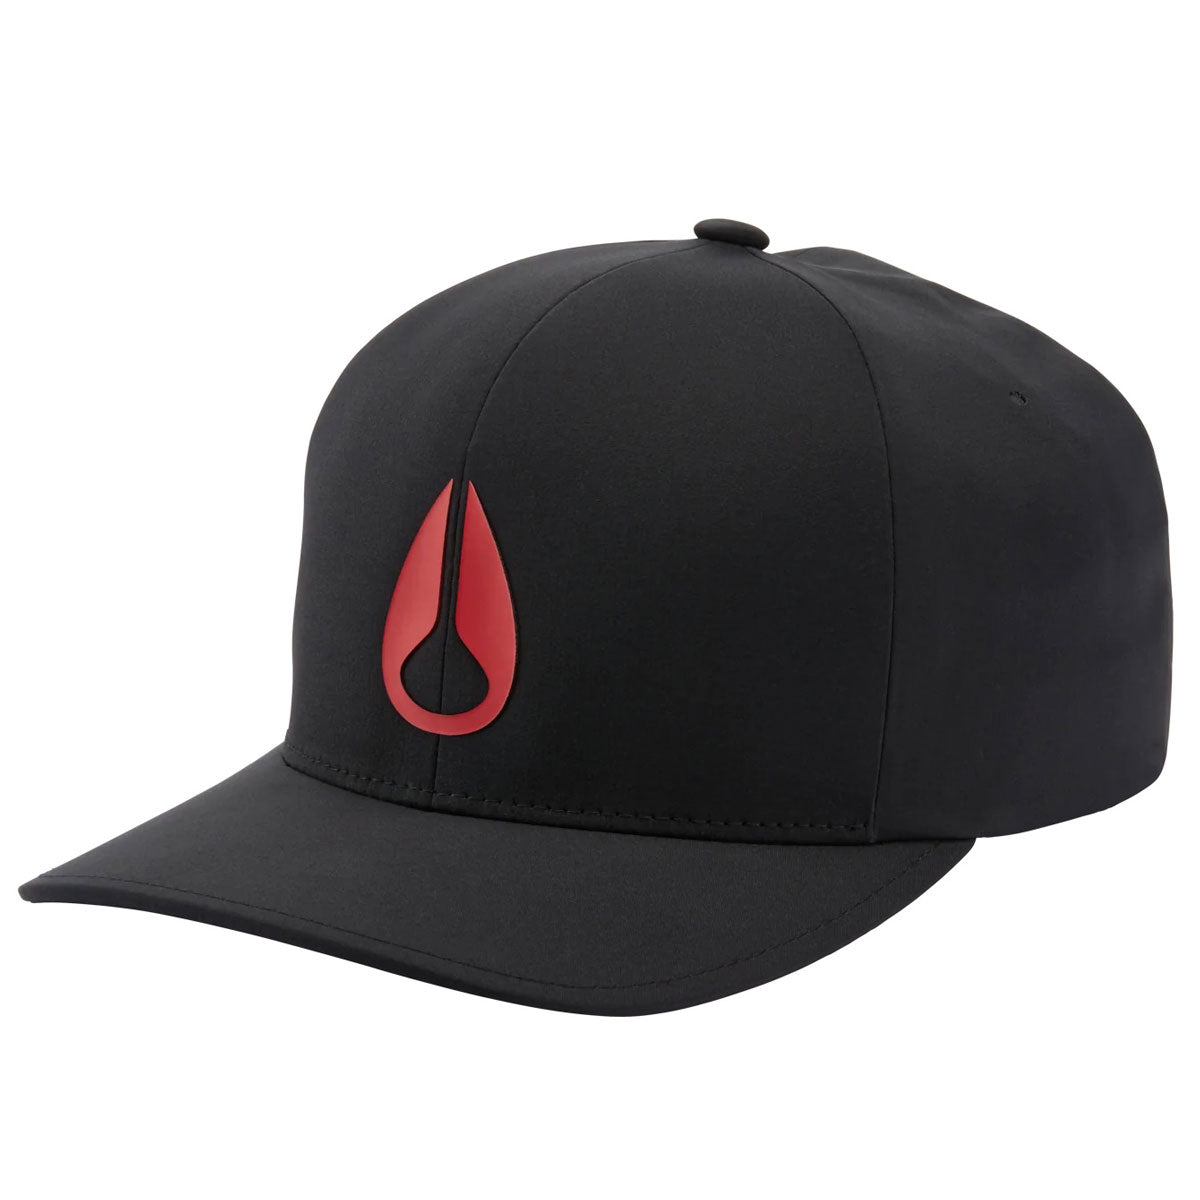 Nixon Arroyo Hat - Black/Red image 1